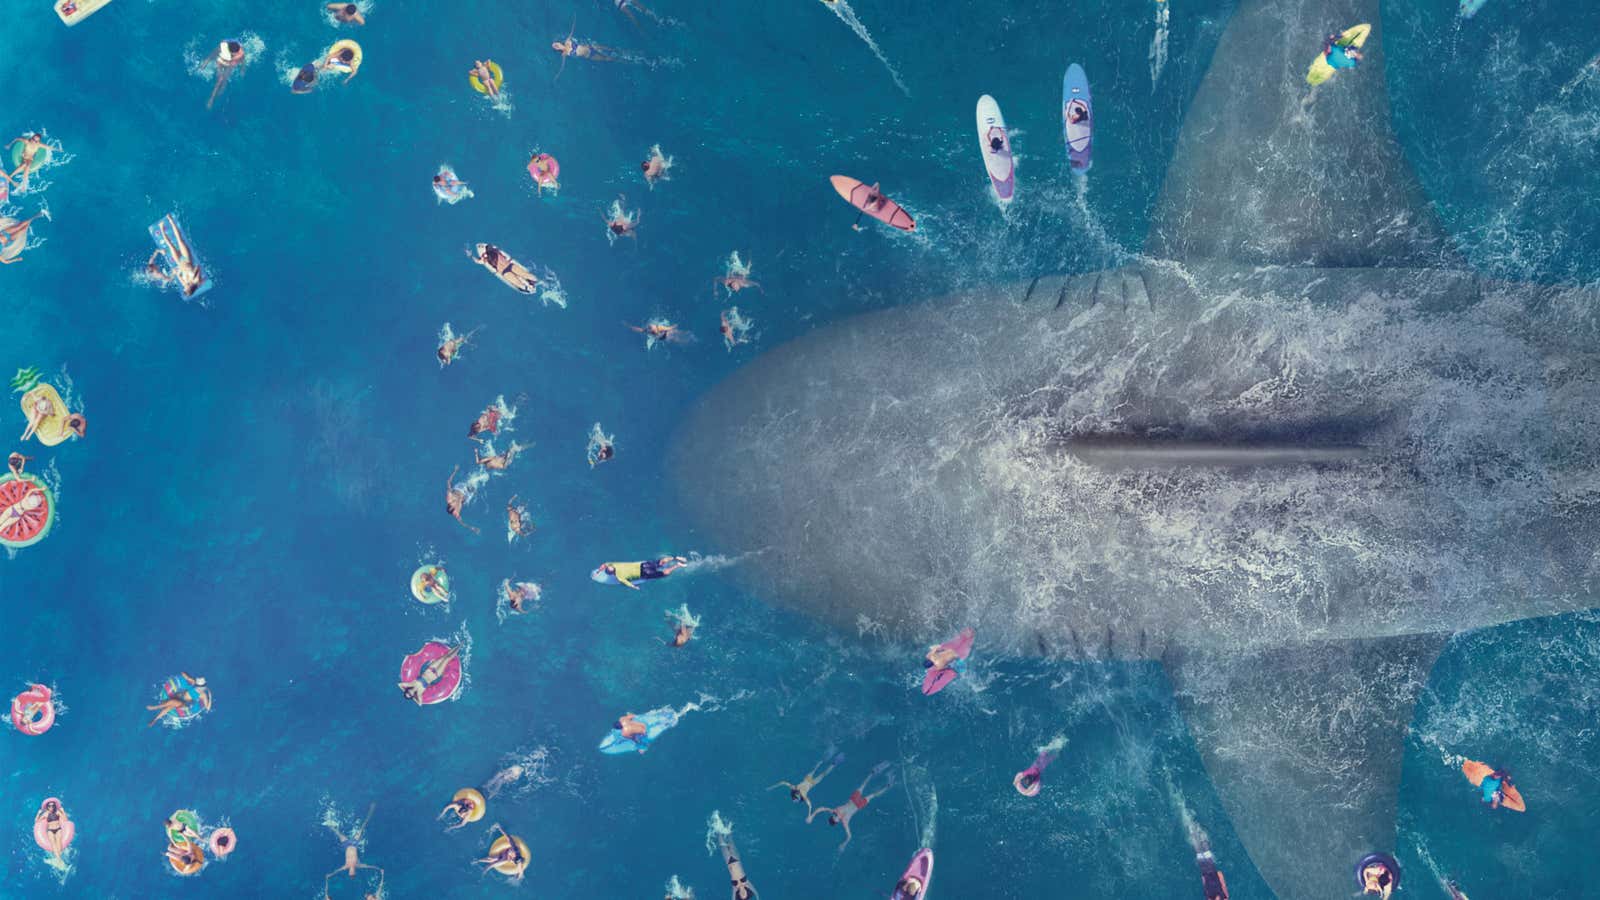 “The Meg” is a big-budget mega-“Jaws” featuring Jason Statham battling a 75ft megalodon.